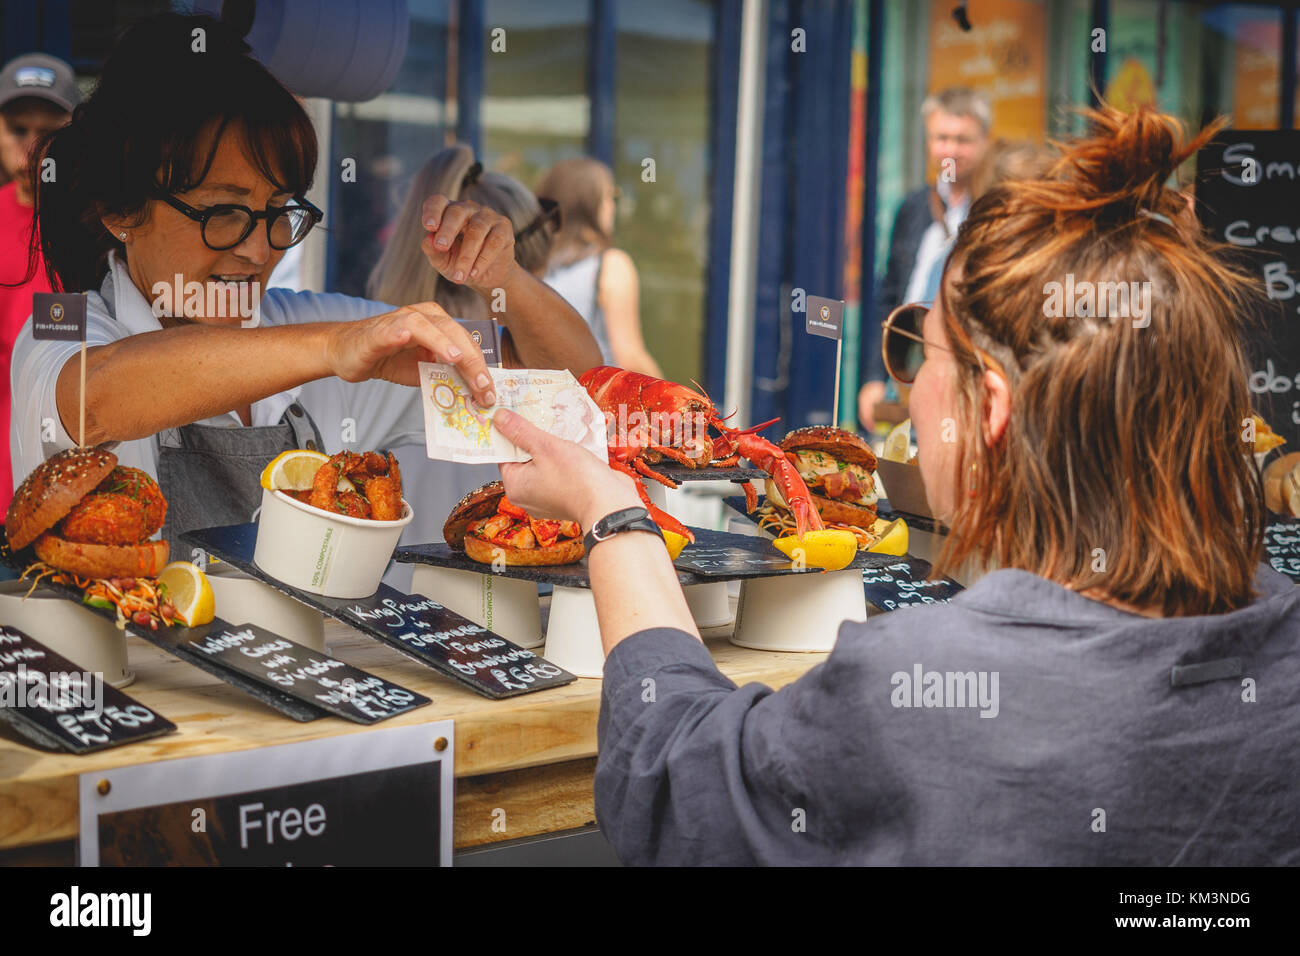 Street food stall in Broadway Market in Hackney. East London (UK), August 2017. Landscape format. Stock Photo